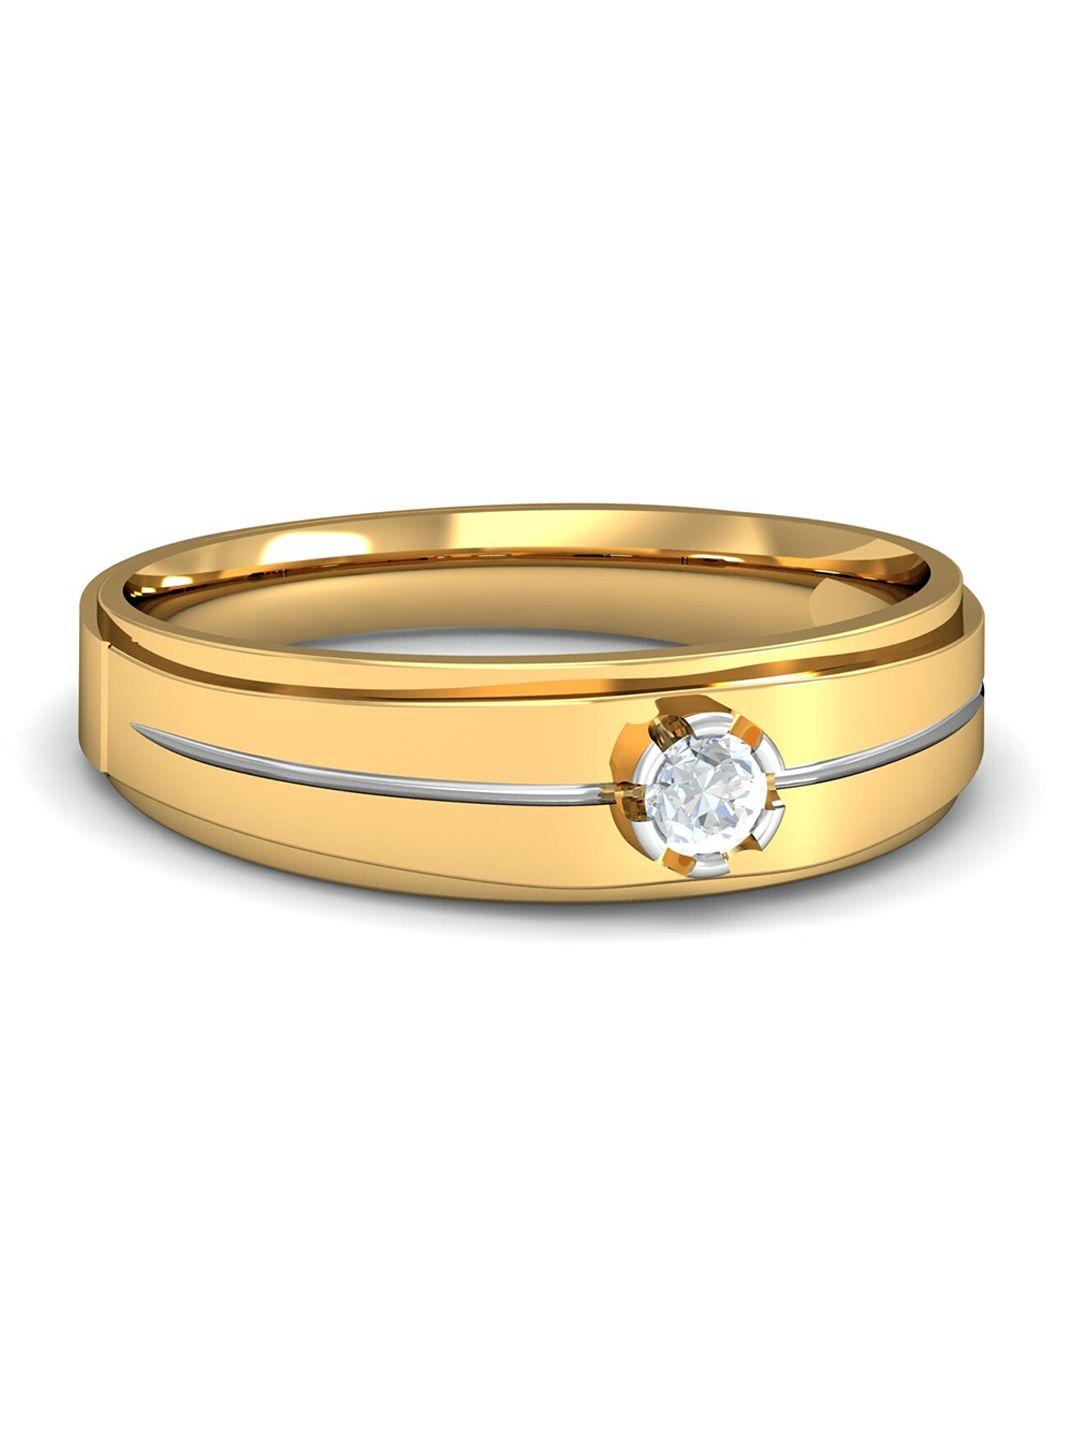 kuberbox men 18kt diamond-studded solitary gold ring - 5.2 gm